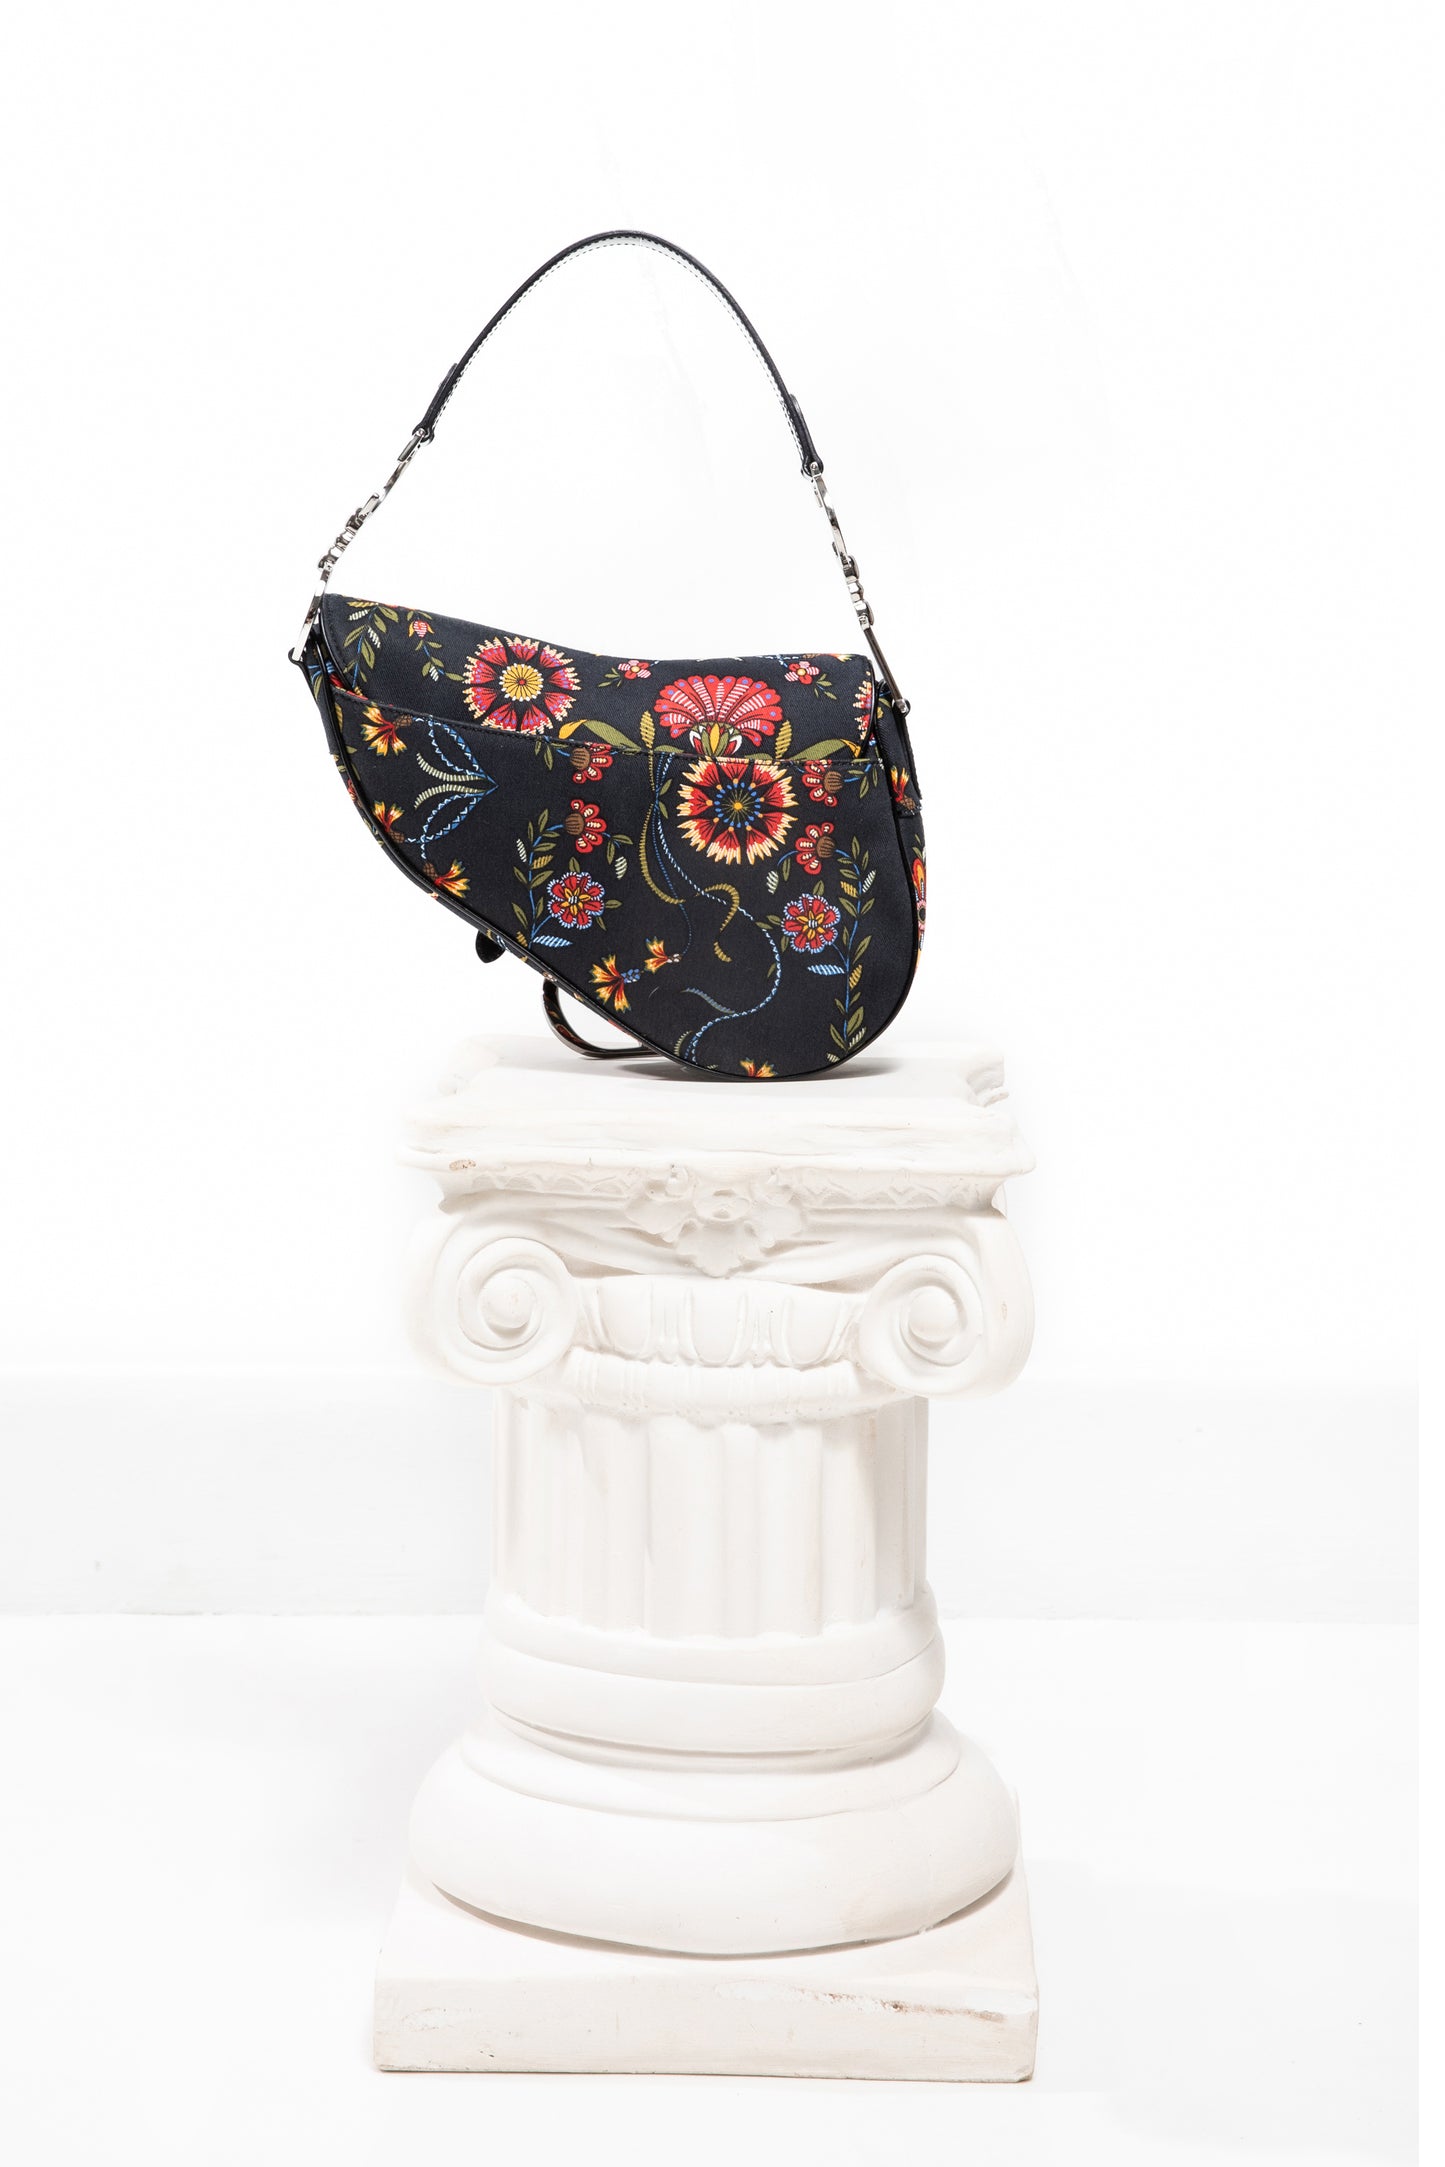 Christian Dior Floral Saddle Bag